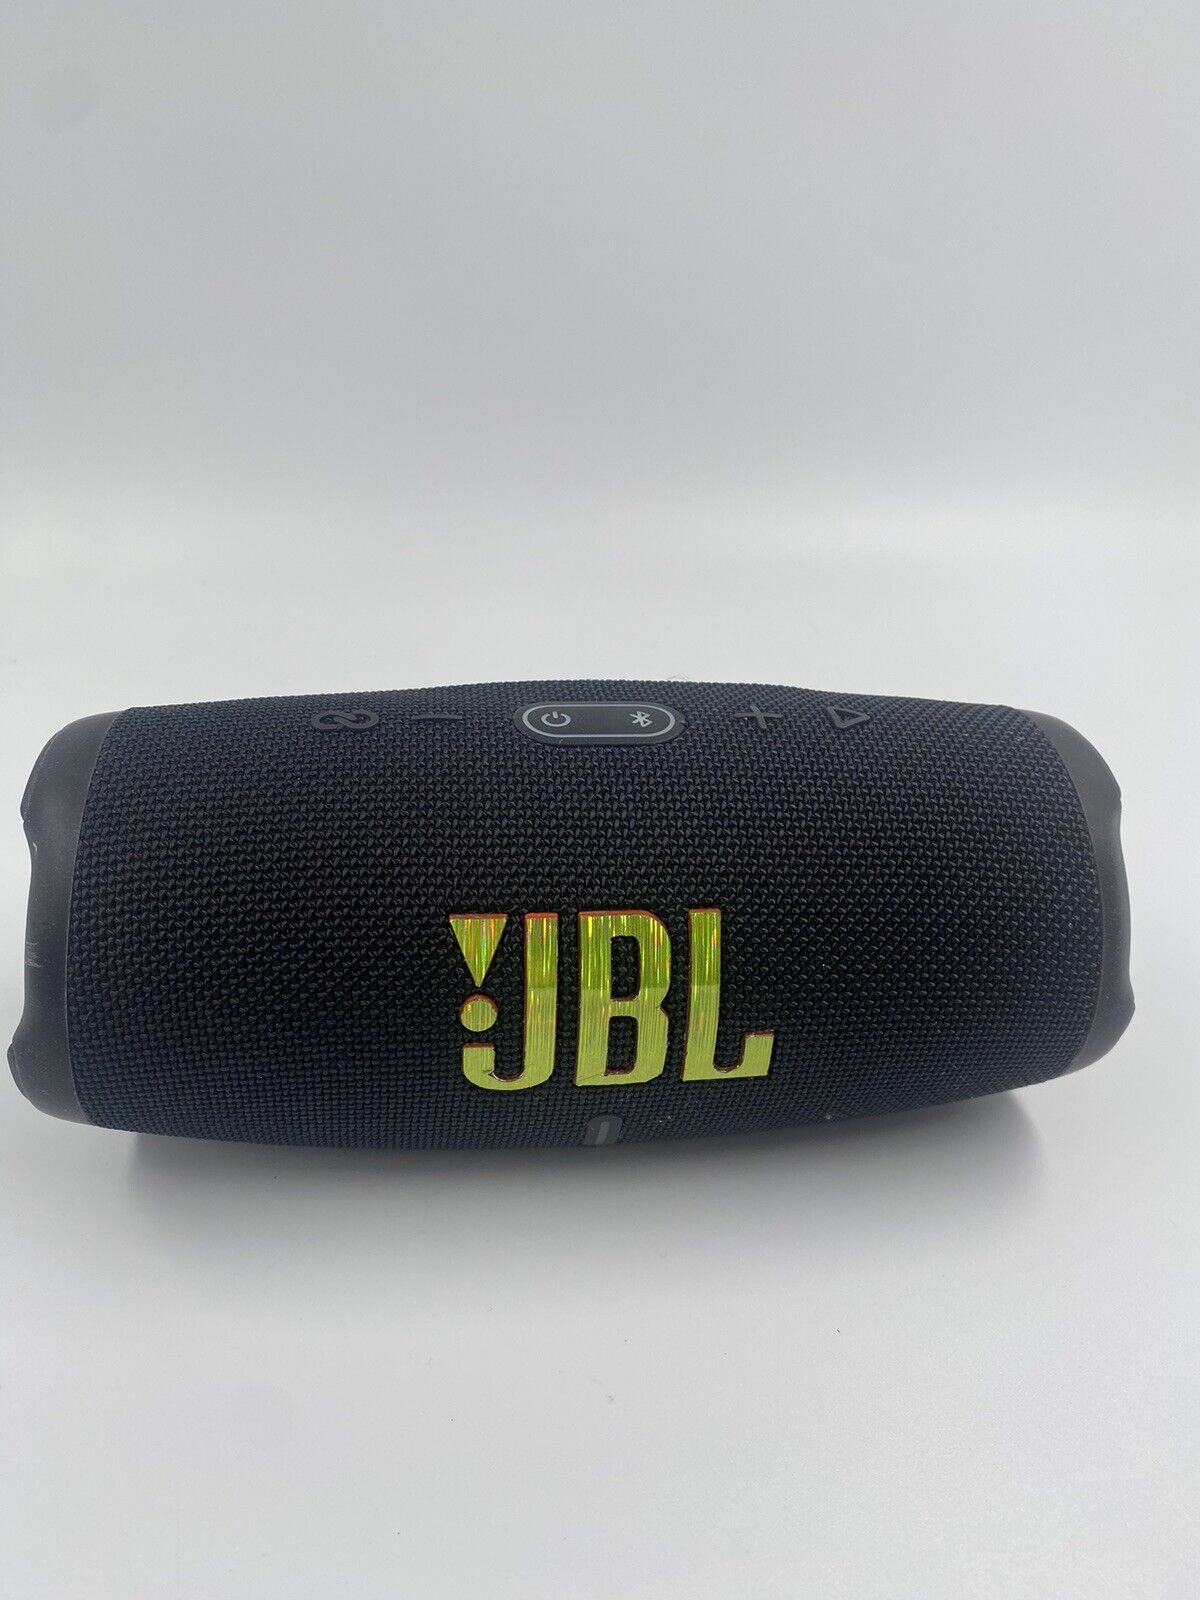 Buy JBL Charge 5 Portable Speaker System - Black online | eBay